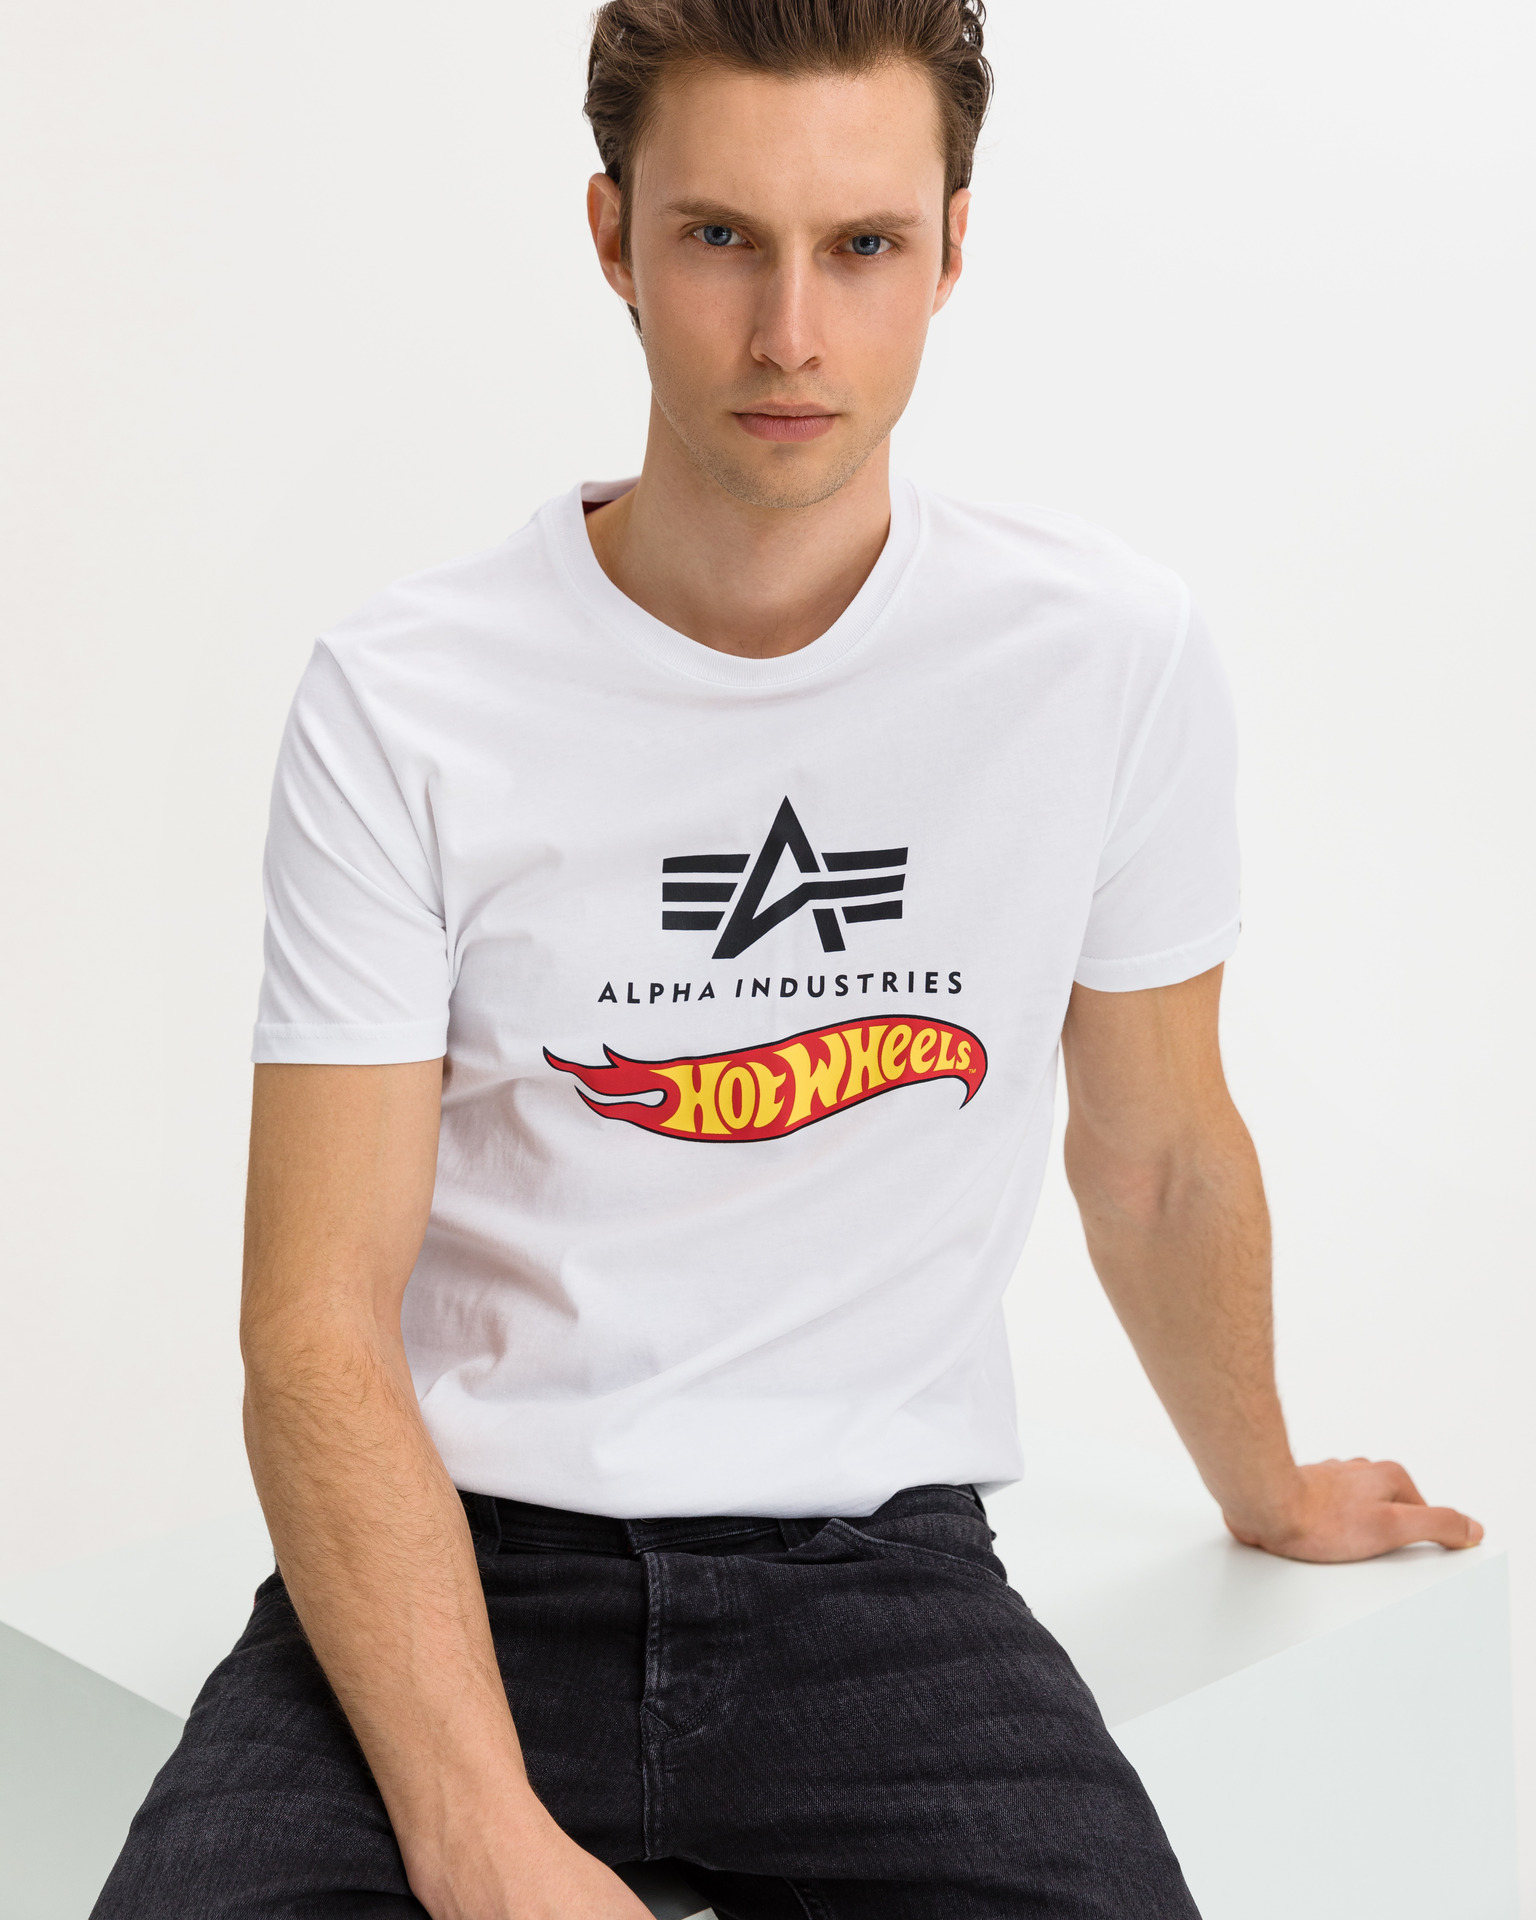 Industries T-shirt Flag - Alpha Hot Wheels